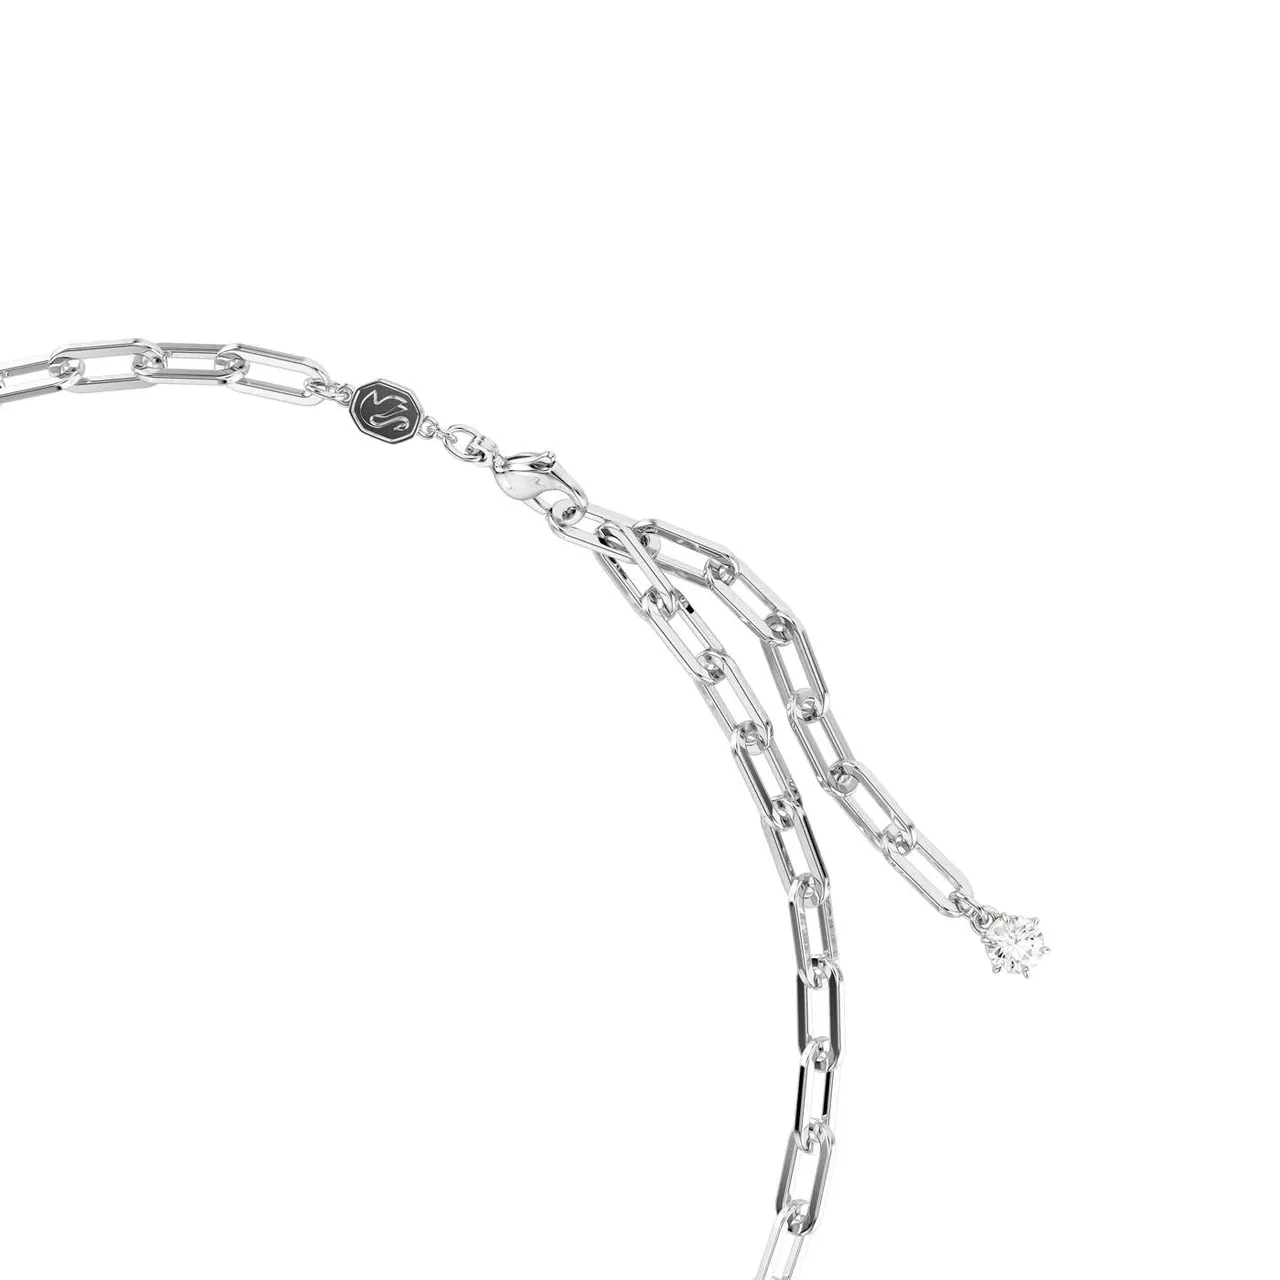 Swarovski Necklaces - Swarovski Constella Silberfarbene Kette 5683360 - silver - Necklaces for ladies